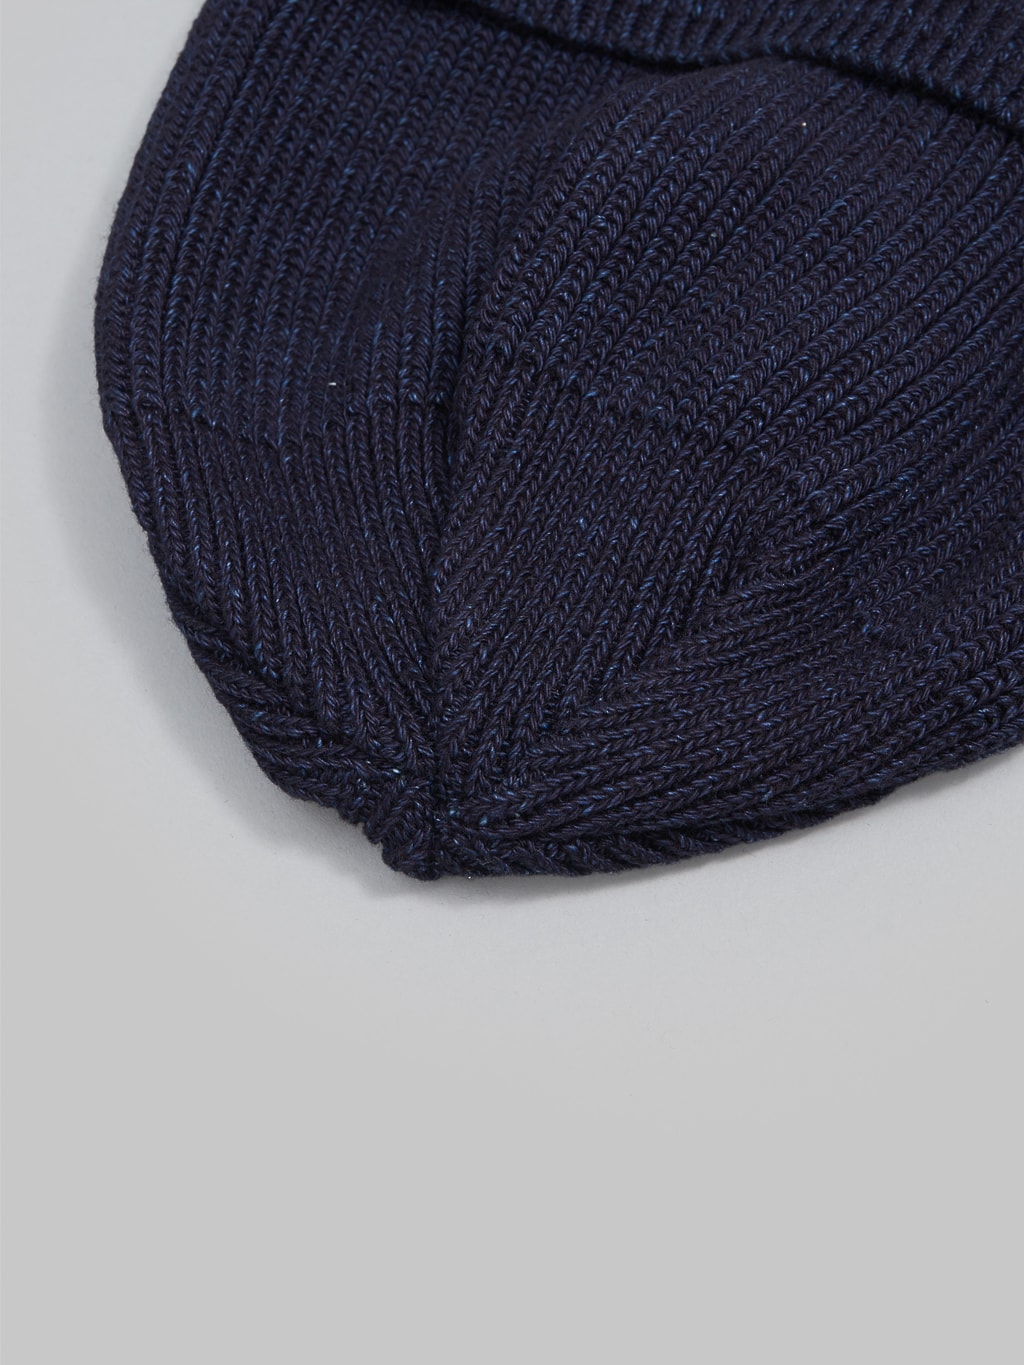 Samurai Jeans SJ501NC Watch Knit Cap Indigo fabric